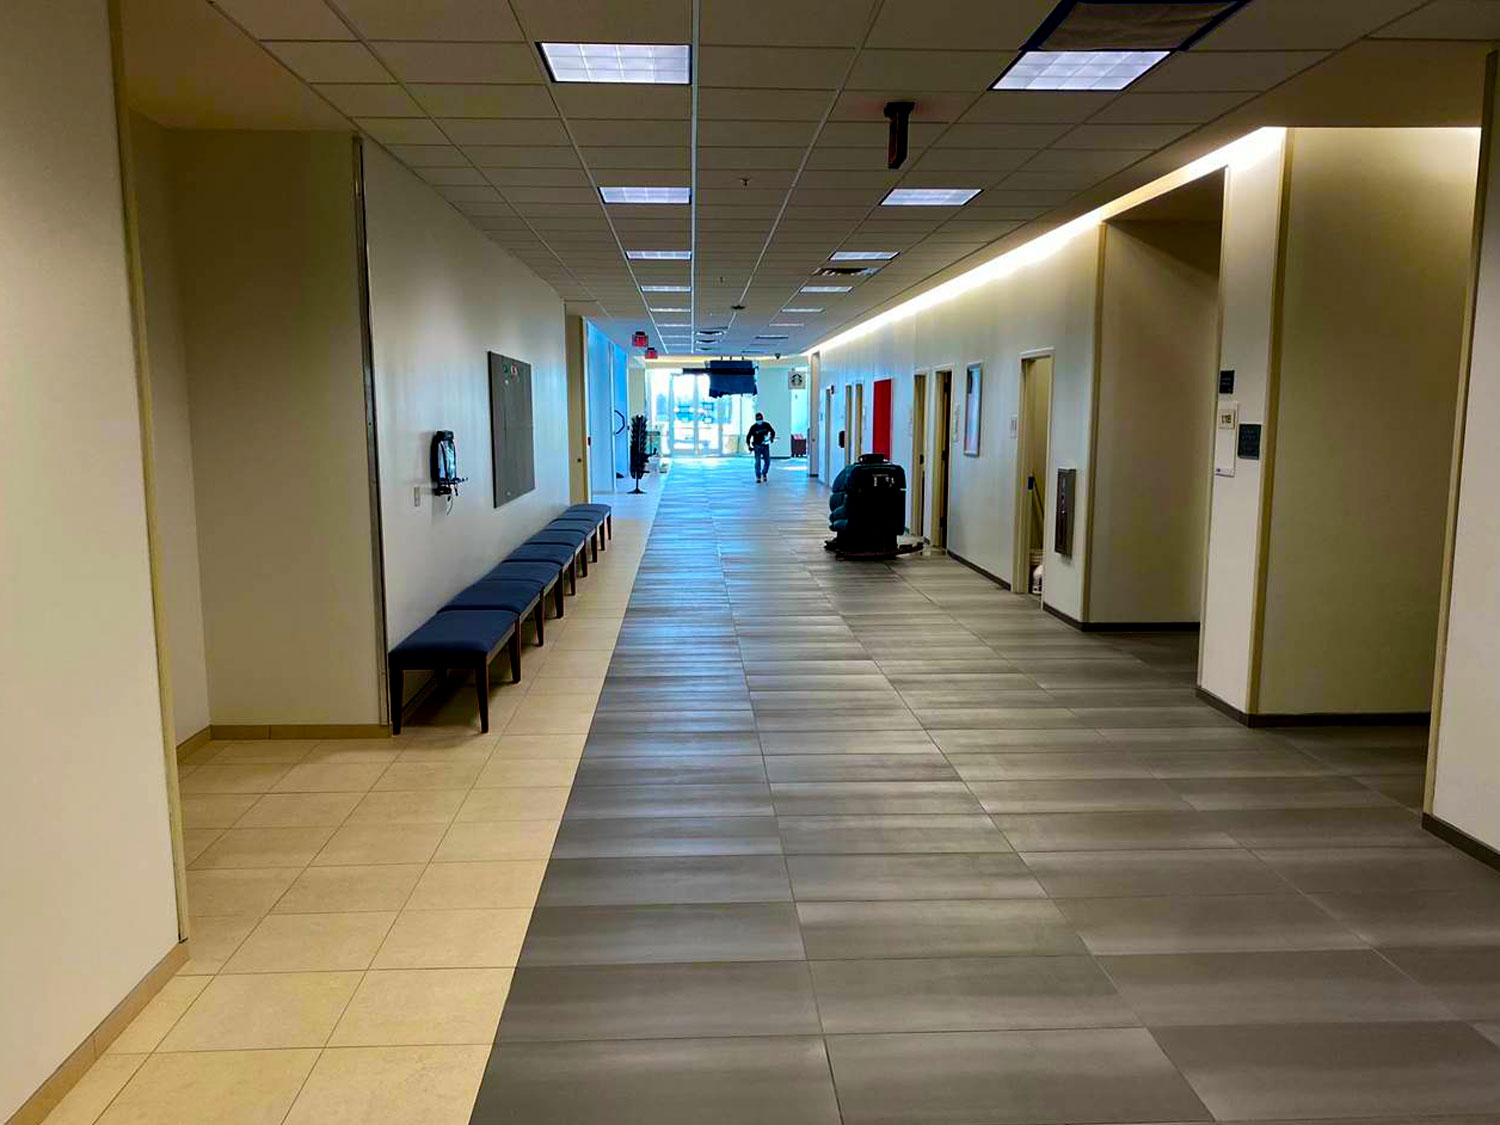 New Hallway Tiles